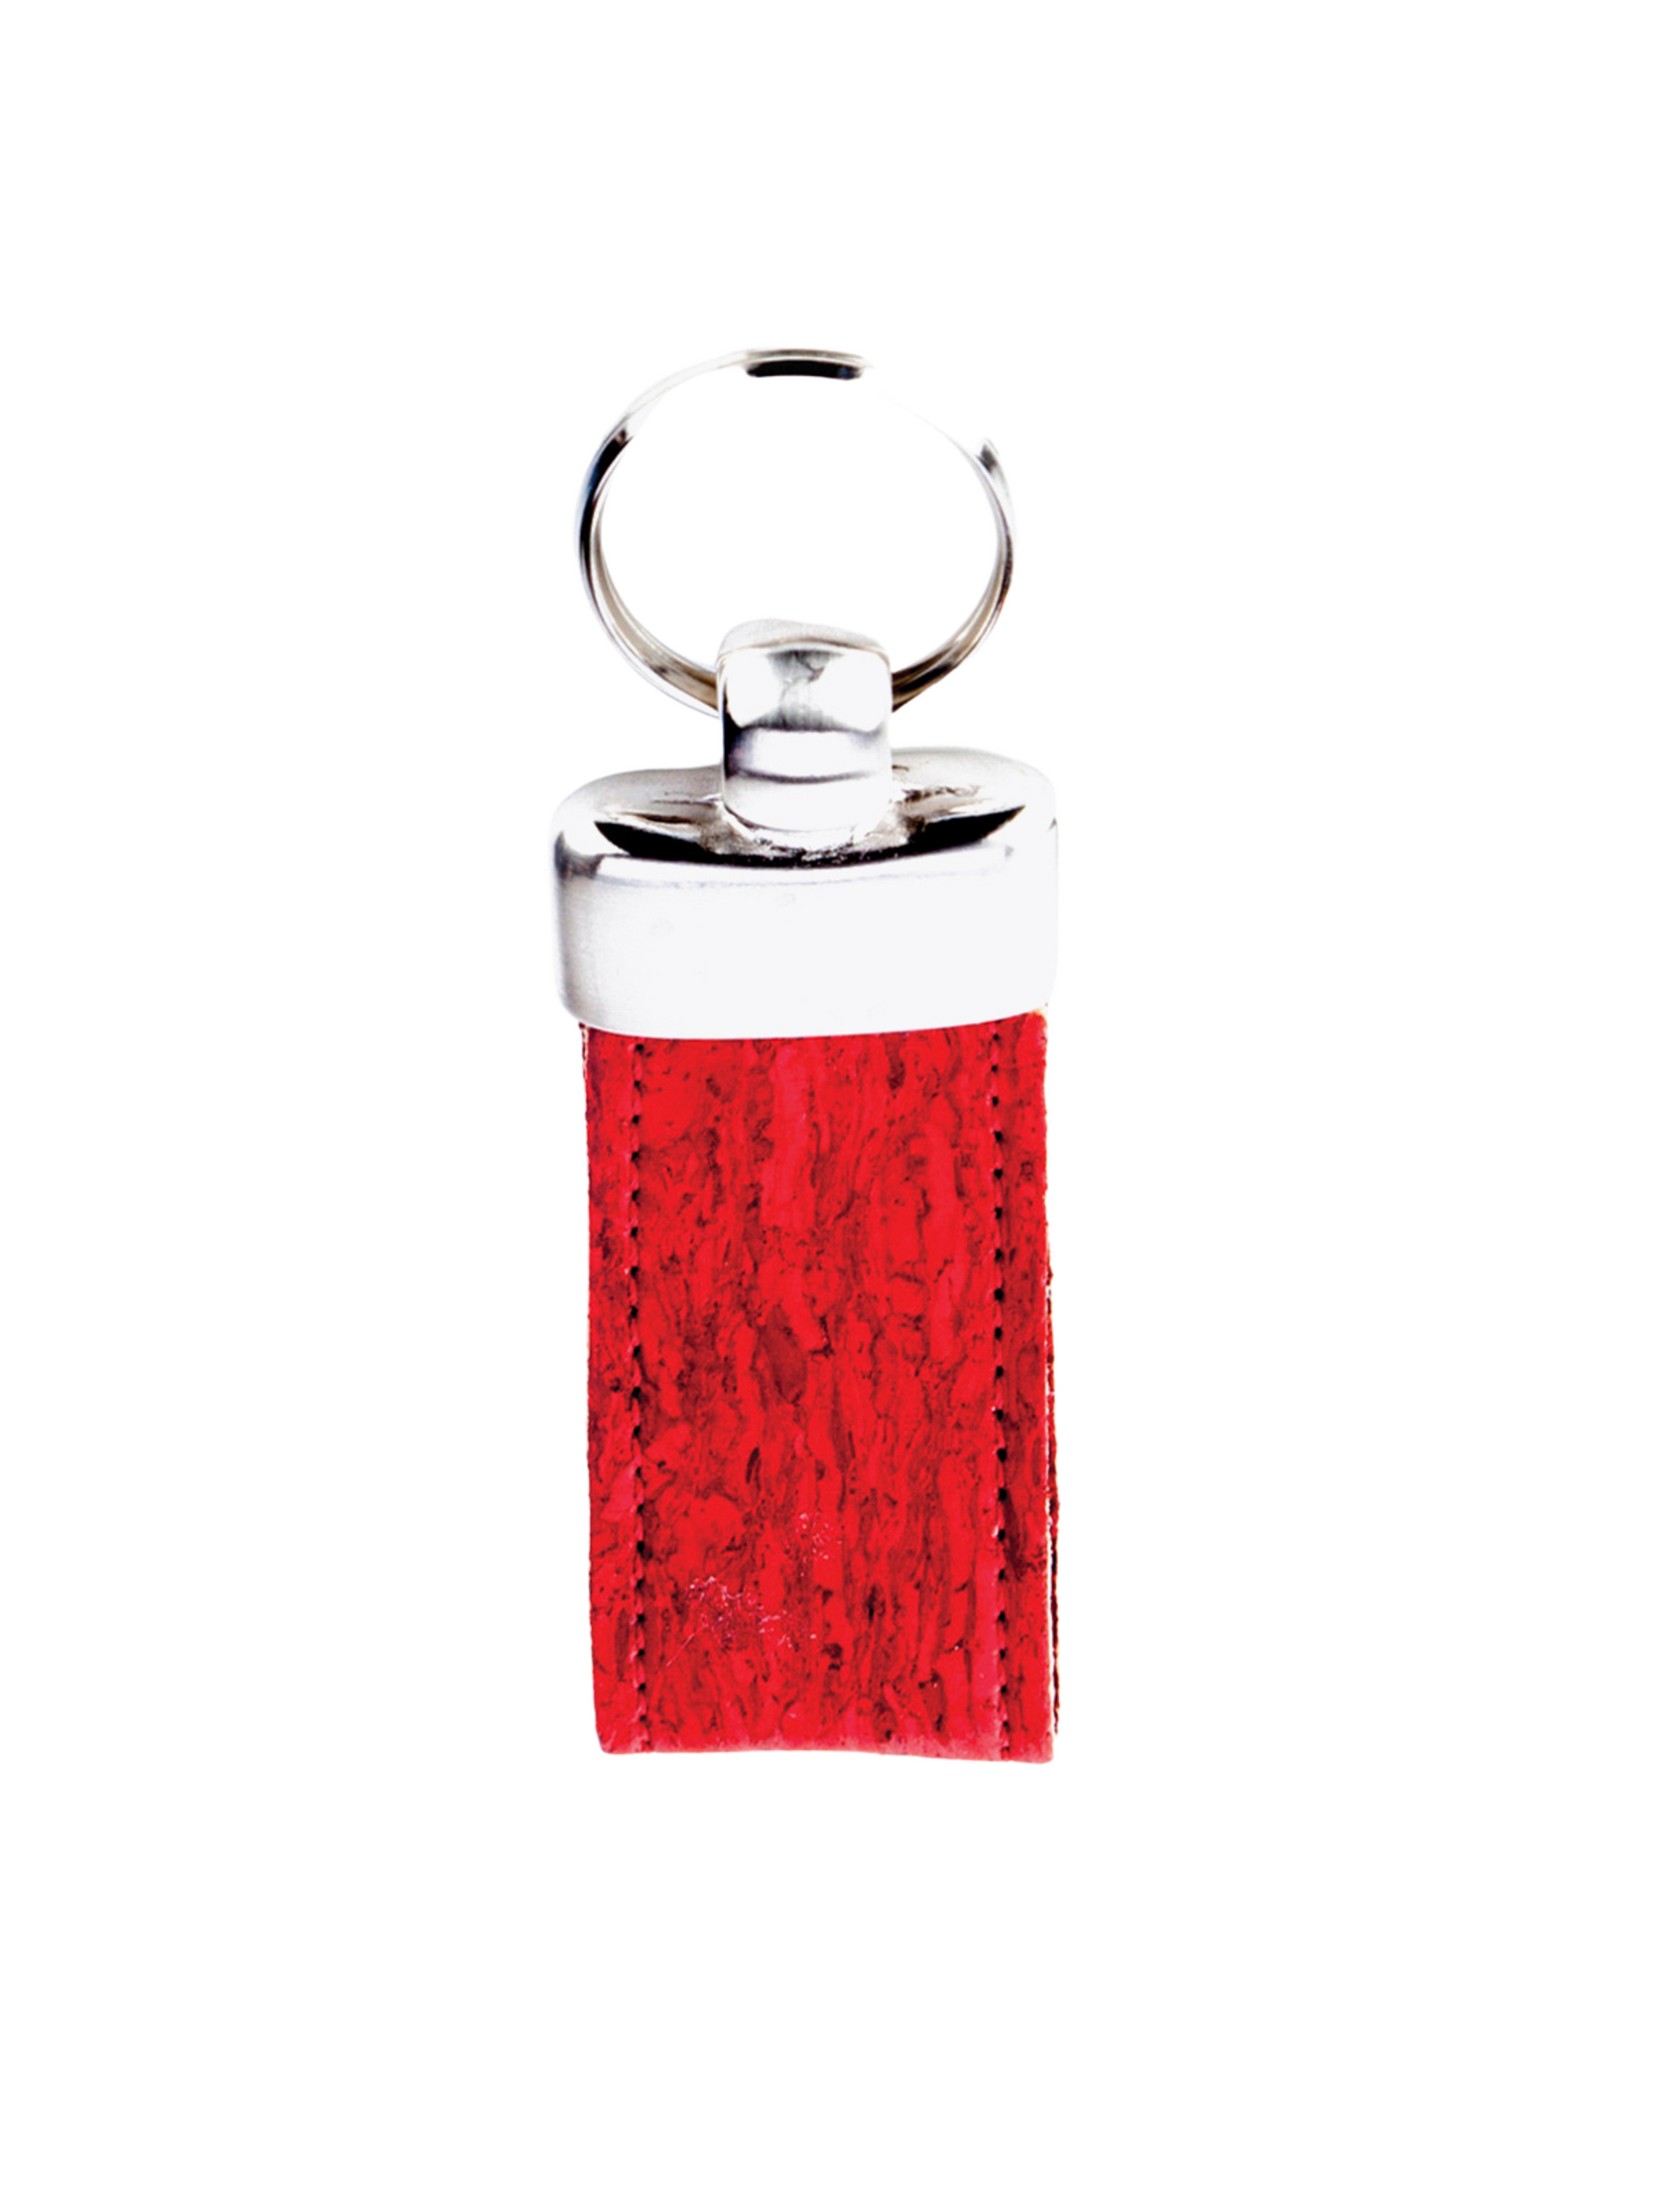 Artelusa Cork Keychain - Red - 9163.07-FA04-1